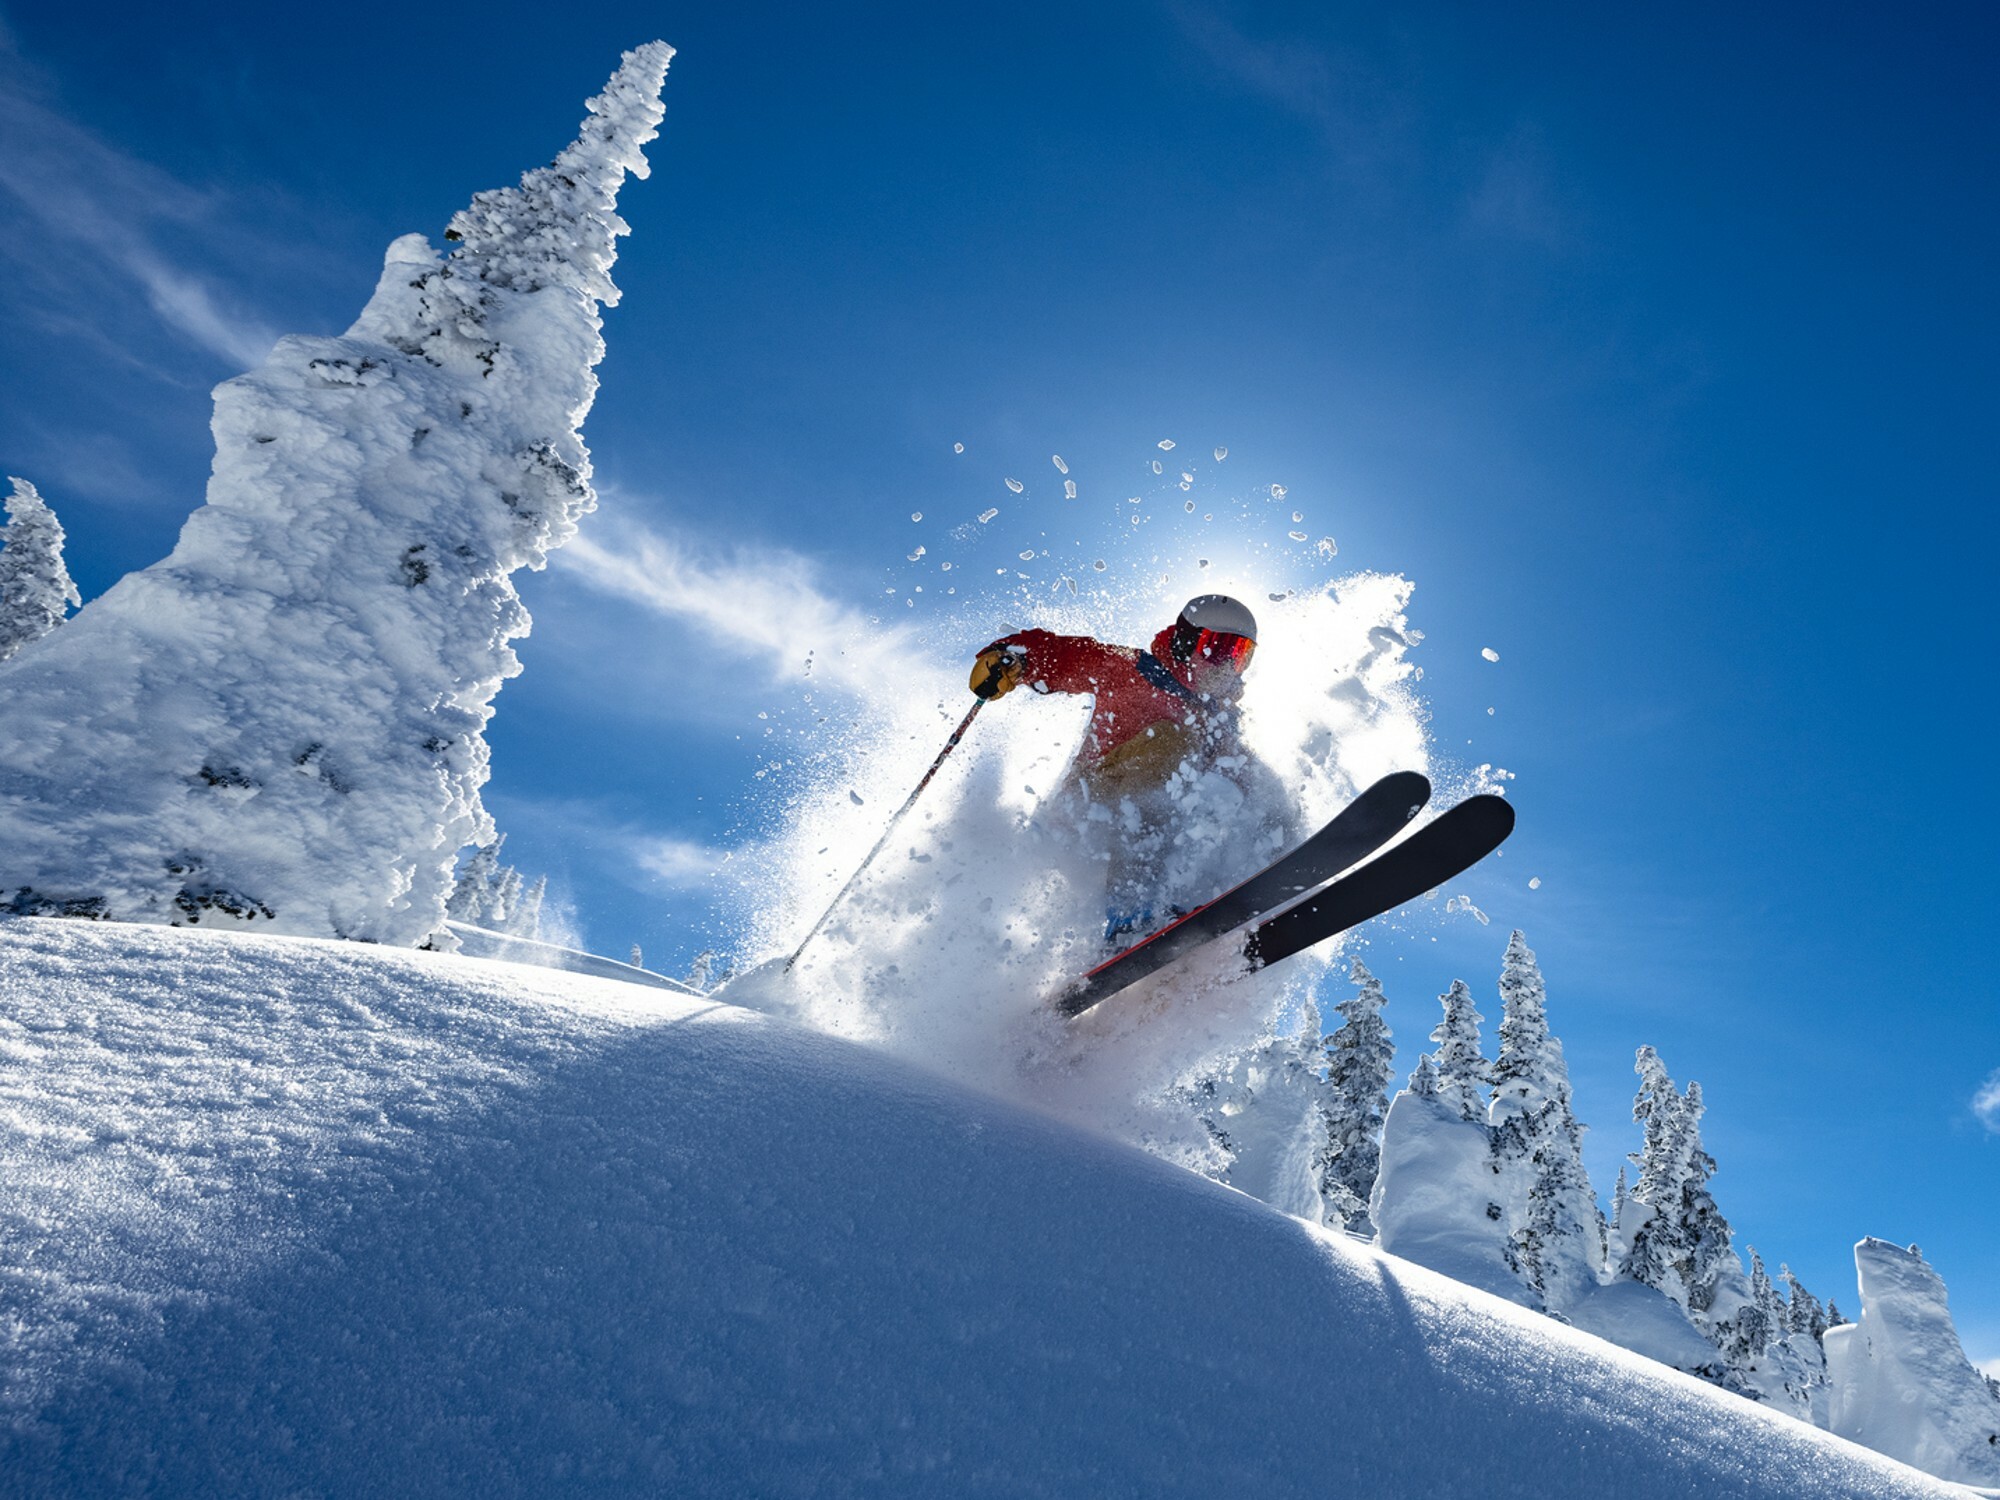 Adaptive winter sports - the ski’s the limit!